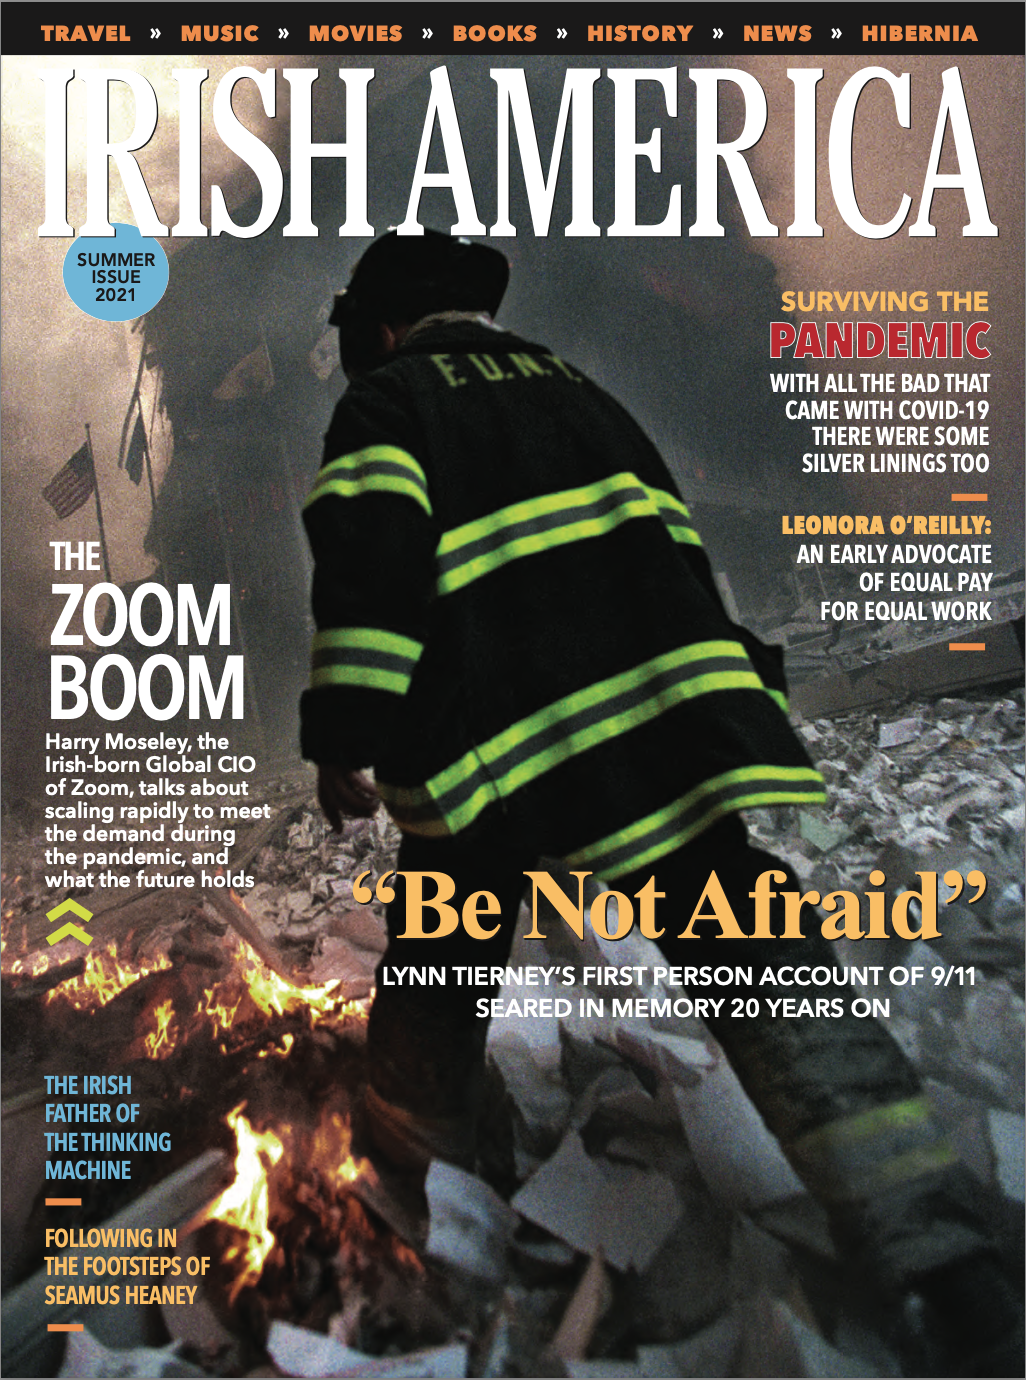 Irish America Summer 2021 Issue